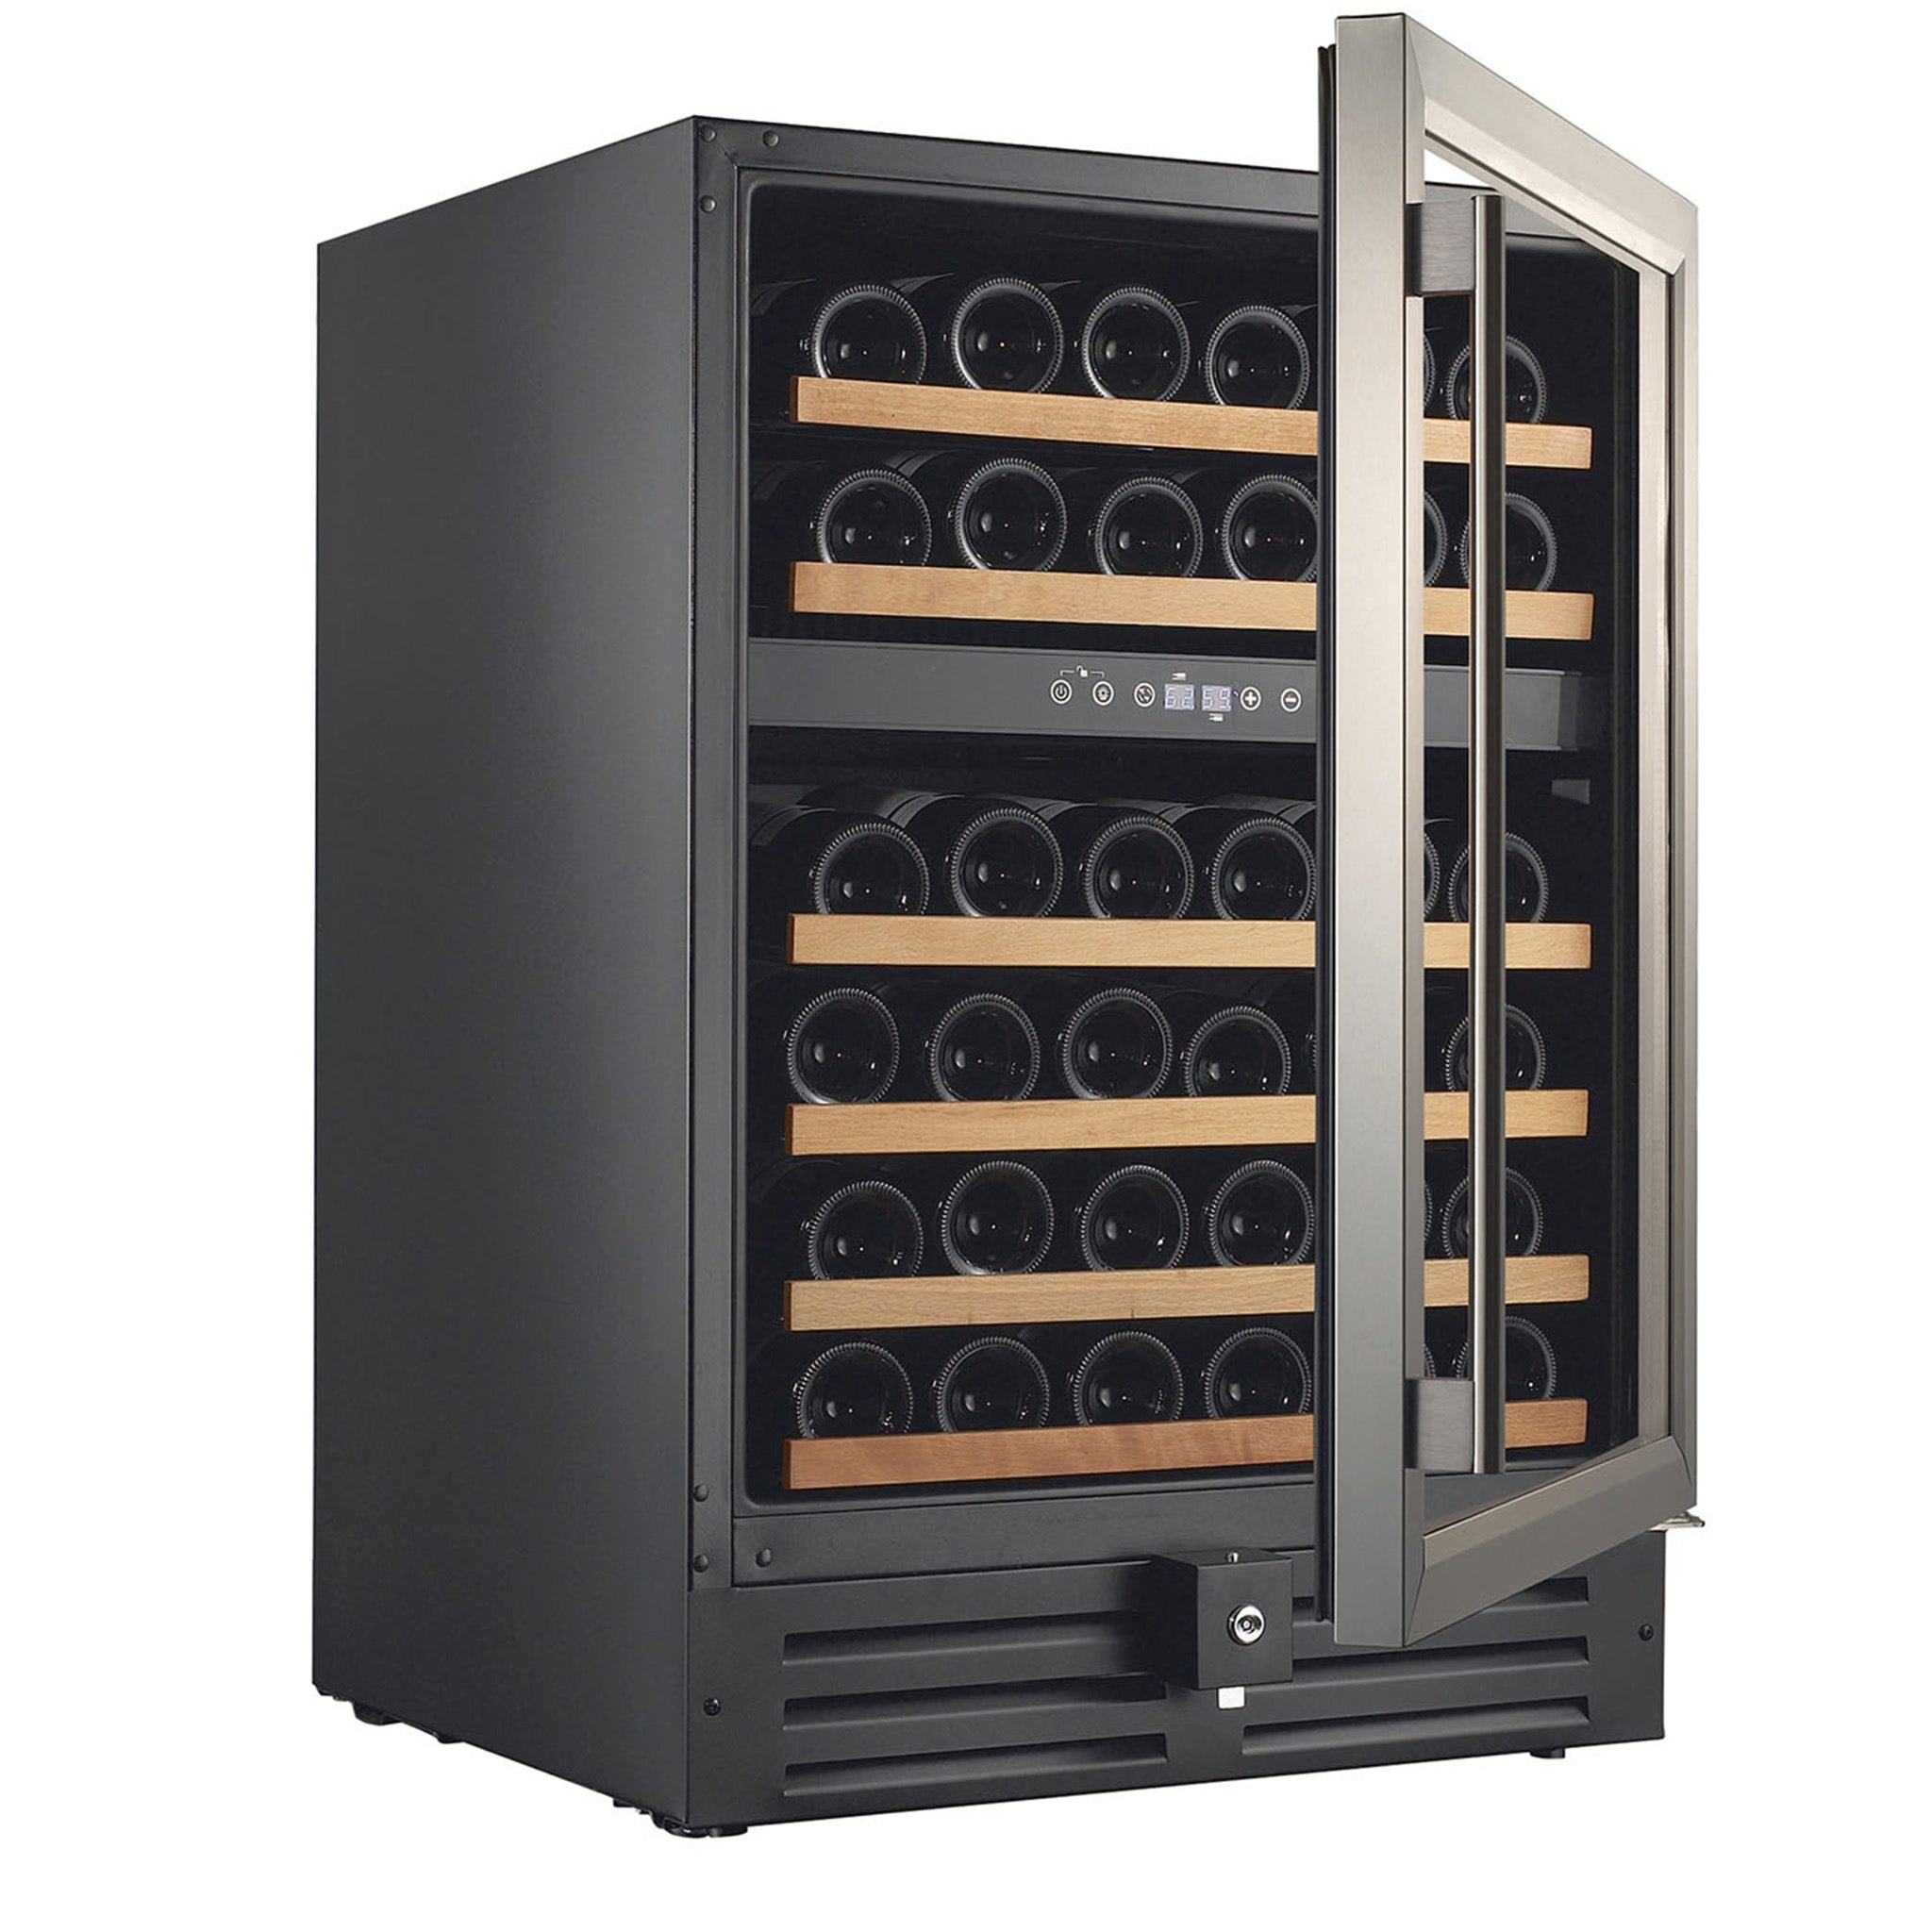 46-bottle Freestanding or Built-in Stainless Steel Wine Cooler